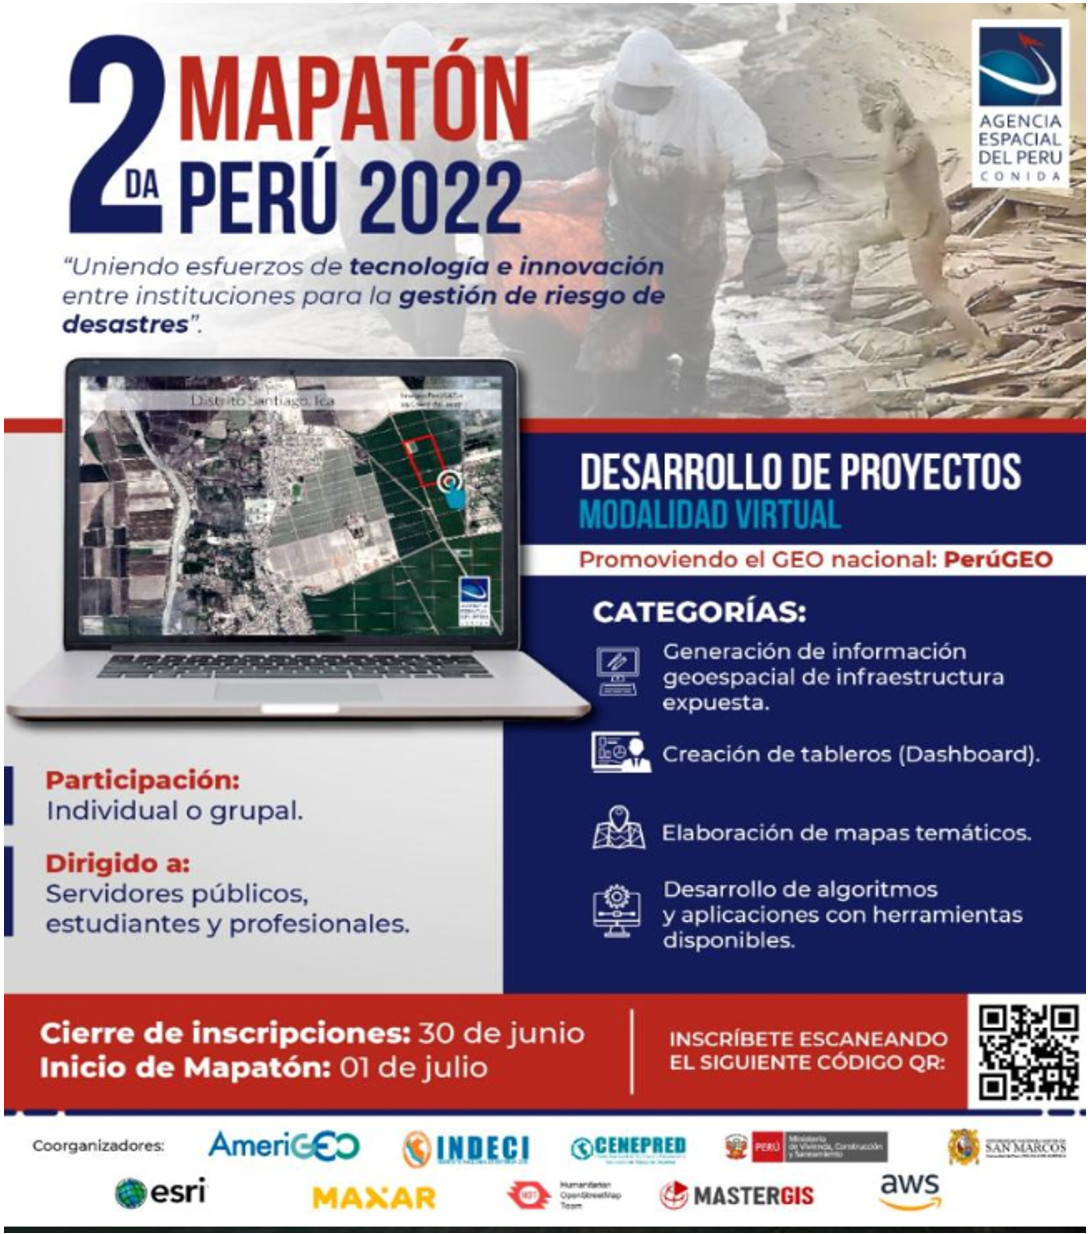 Flyer of the 2nd Mapatón Peru 2022